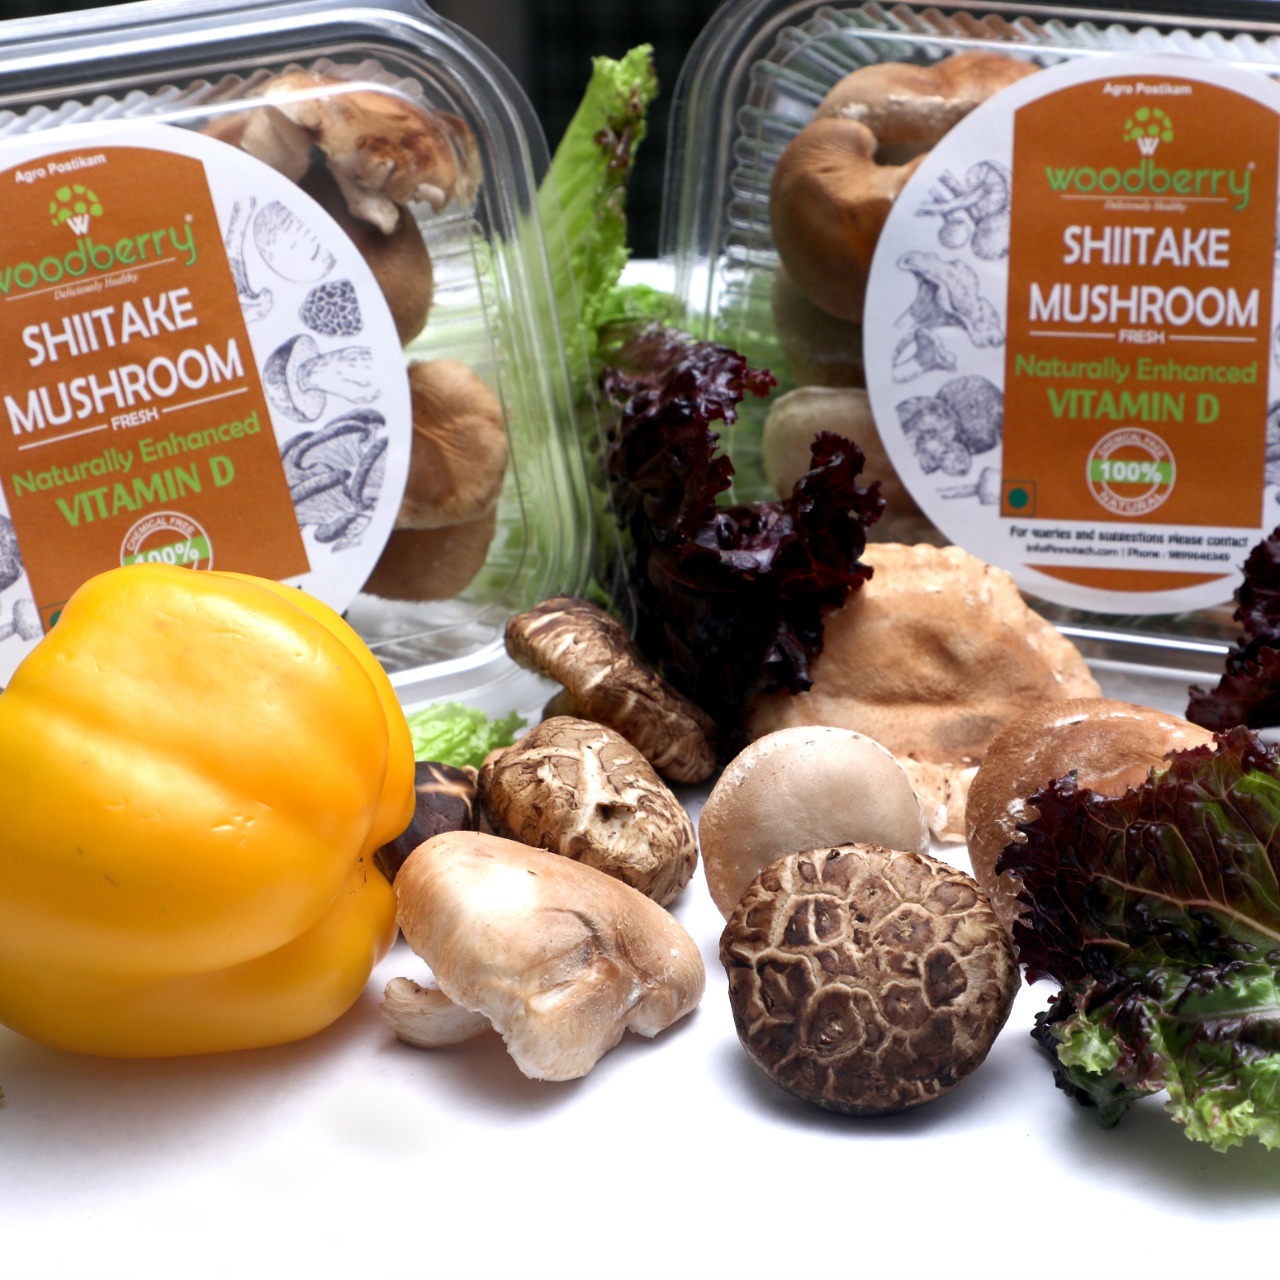 Shiitake Fresh - 100% Chemical Free Mushrooms from Woodberry Mushrooms